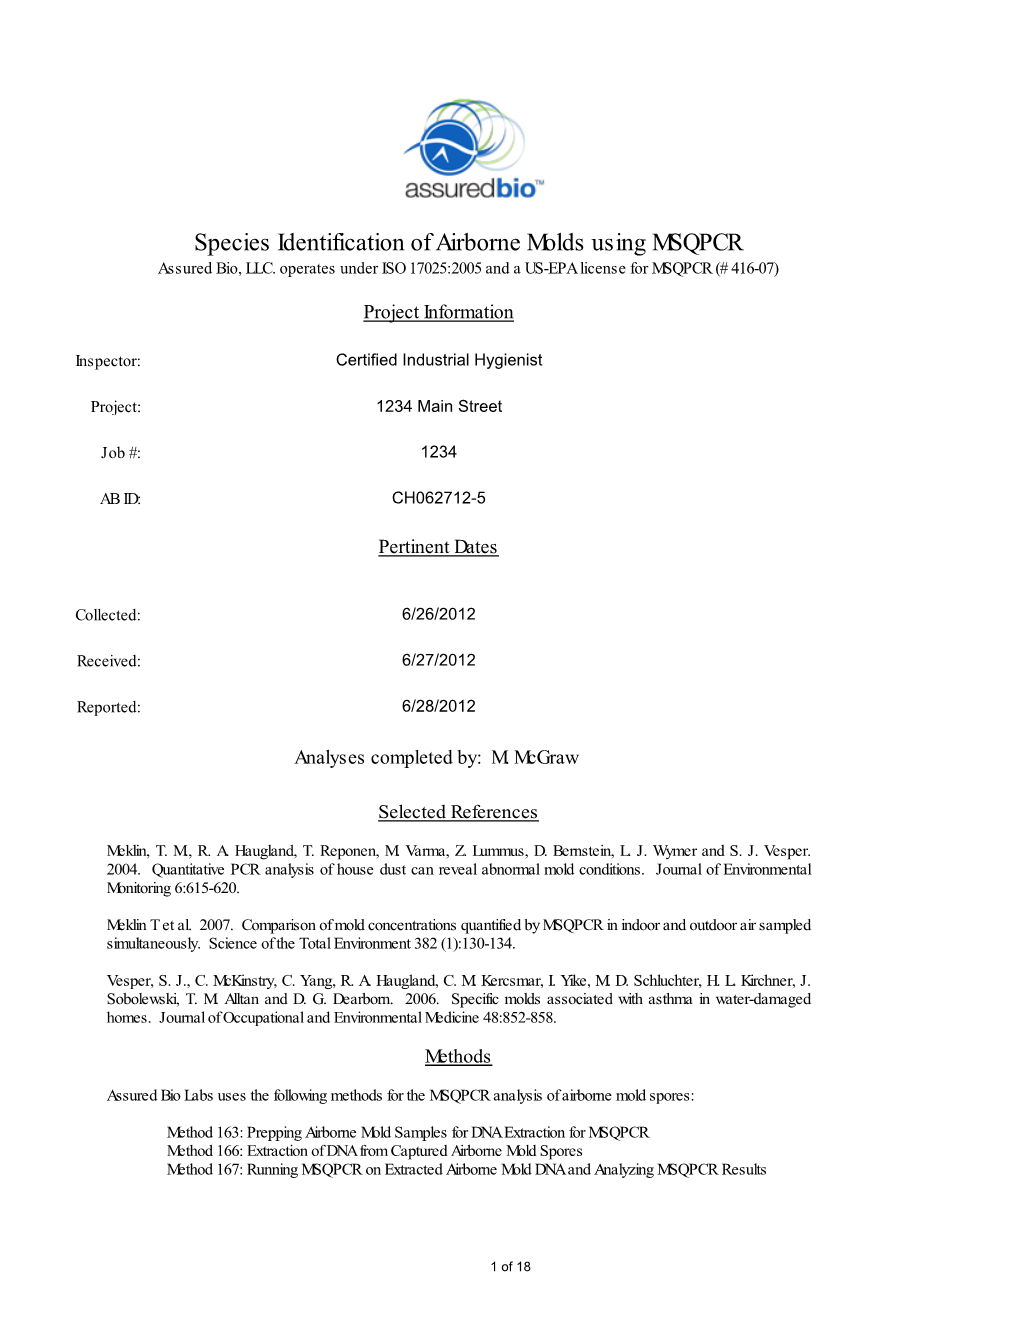 Species Identification of Airborne Molds Using MSQPCR Assured Bio, LLC